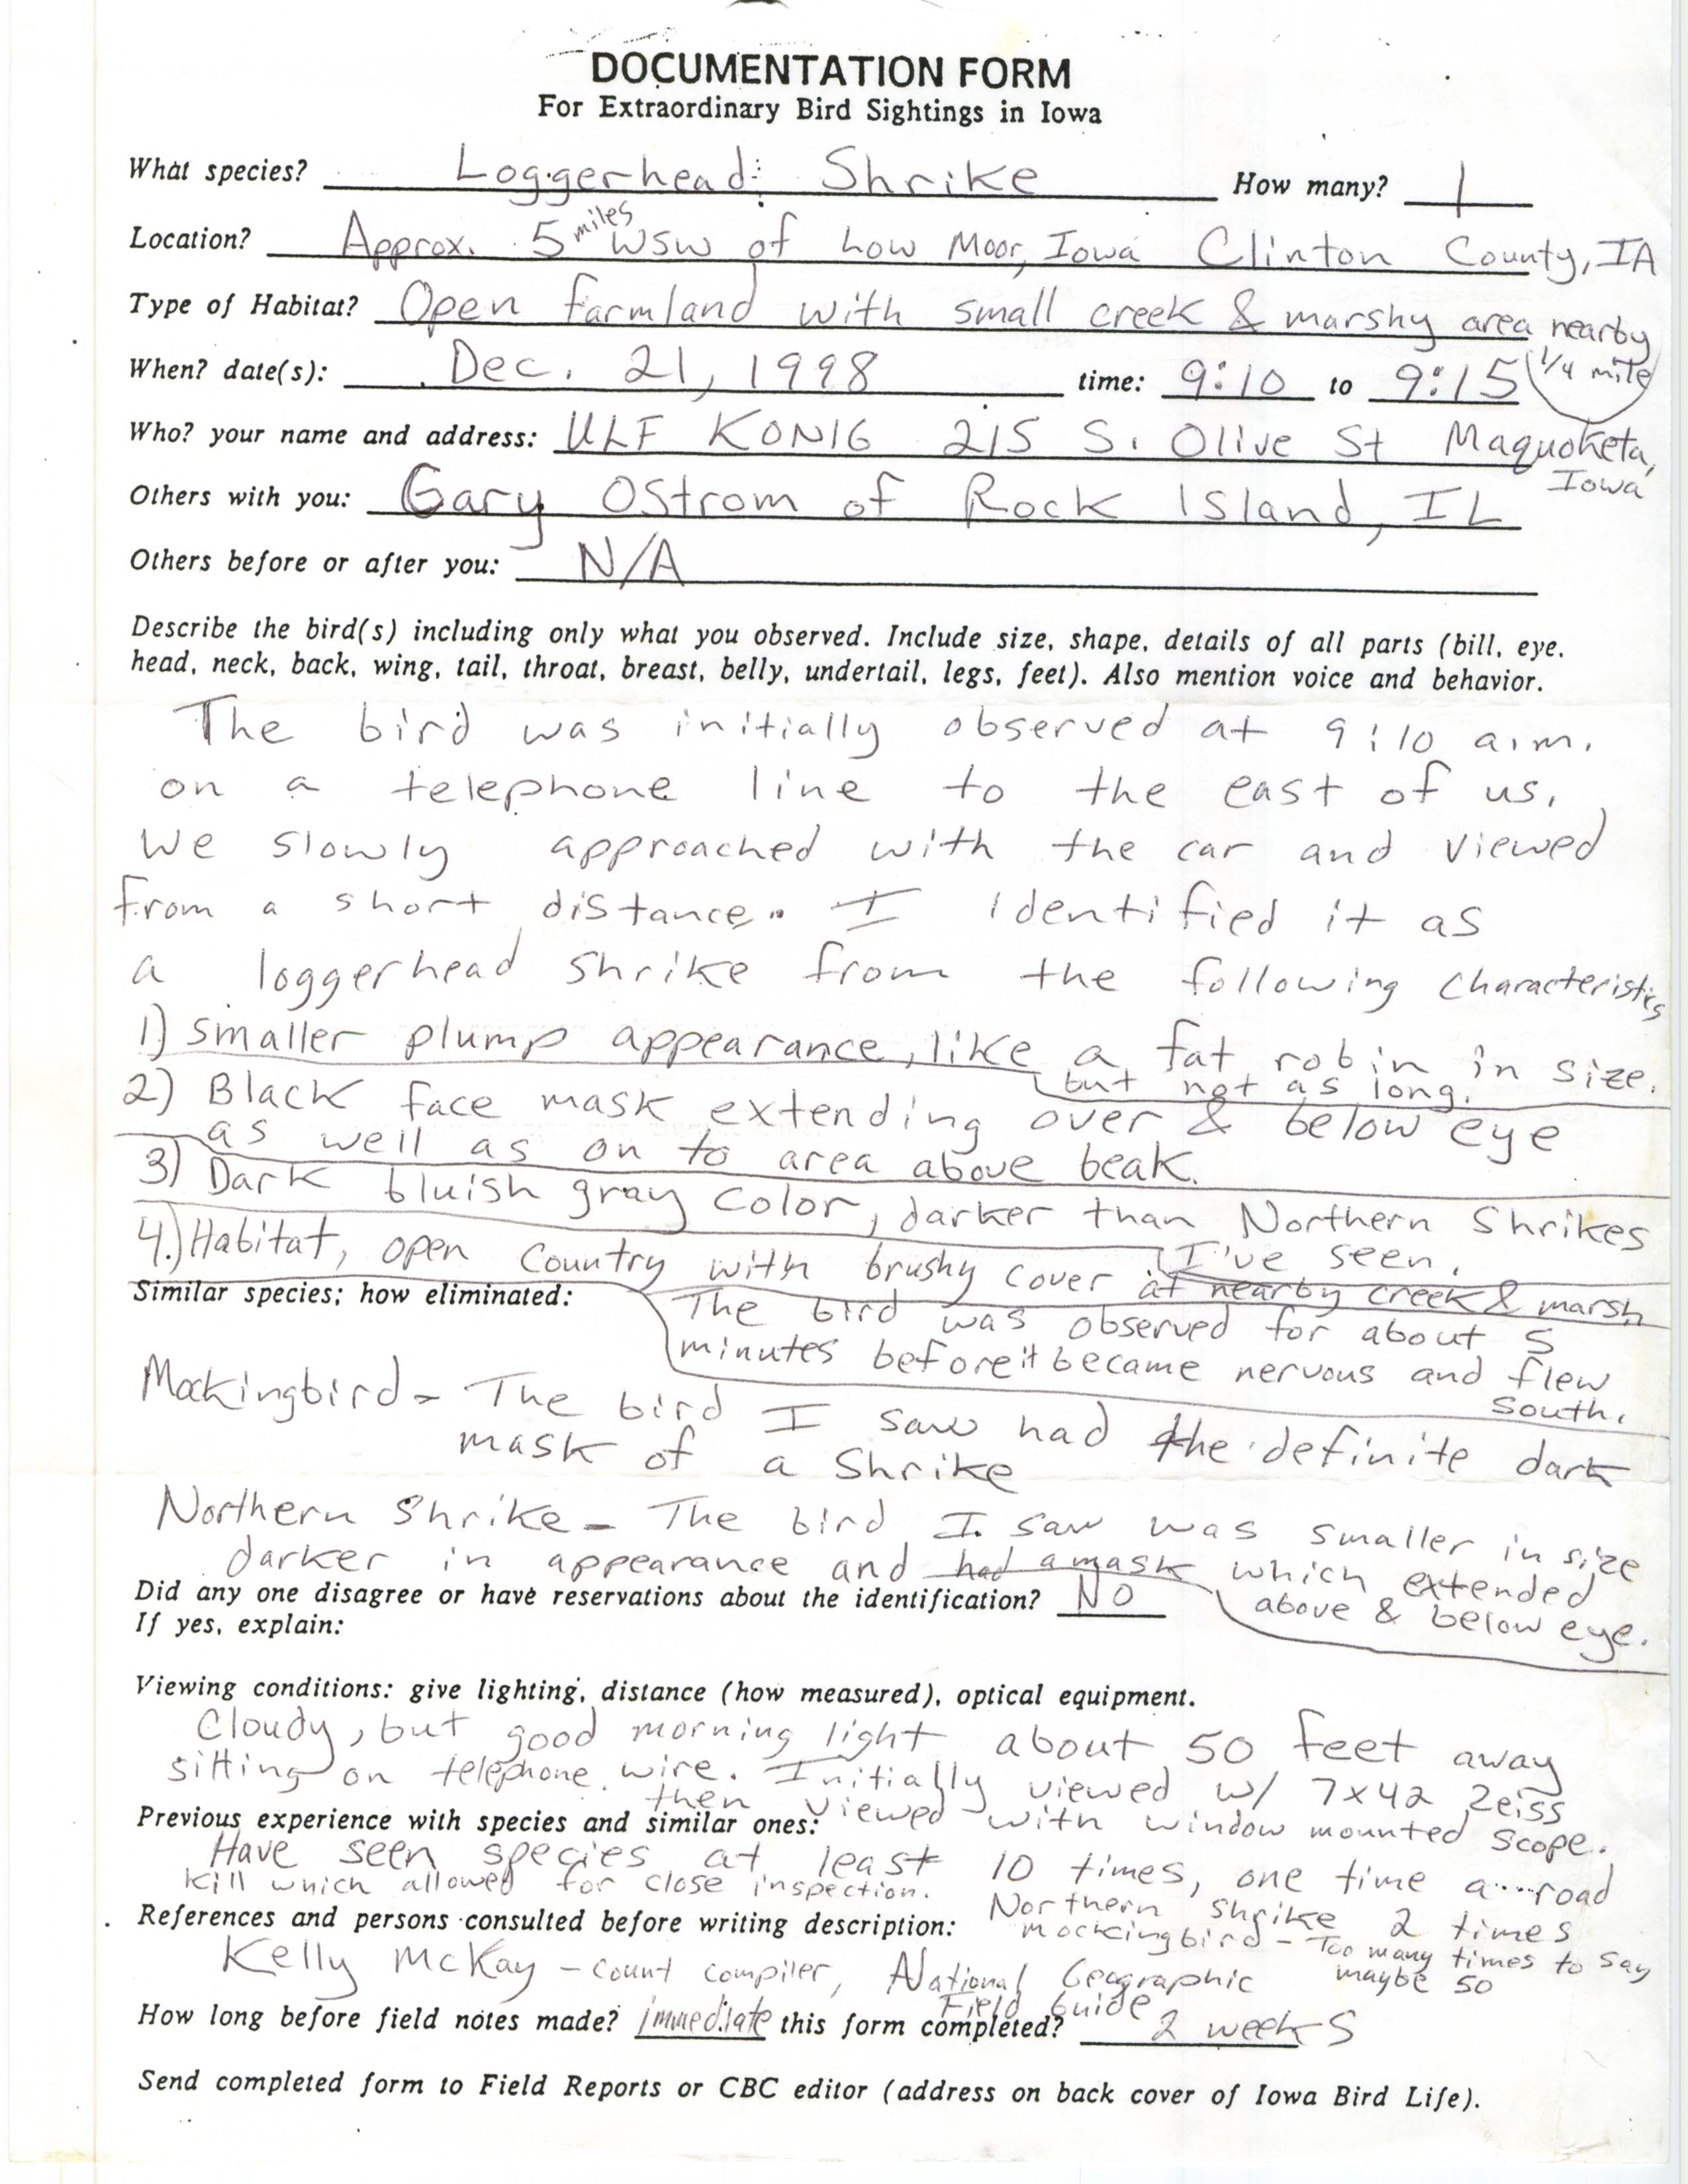 Rare bird documentation form for Loggerhead Shrike at west southwest of Low Moor, 1998